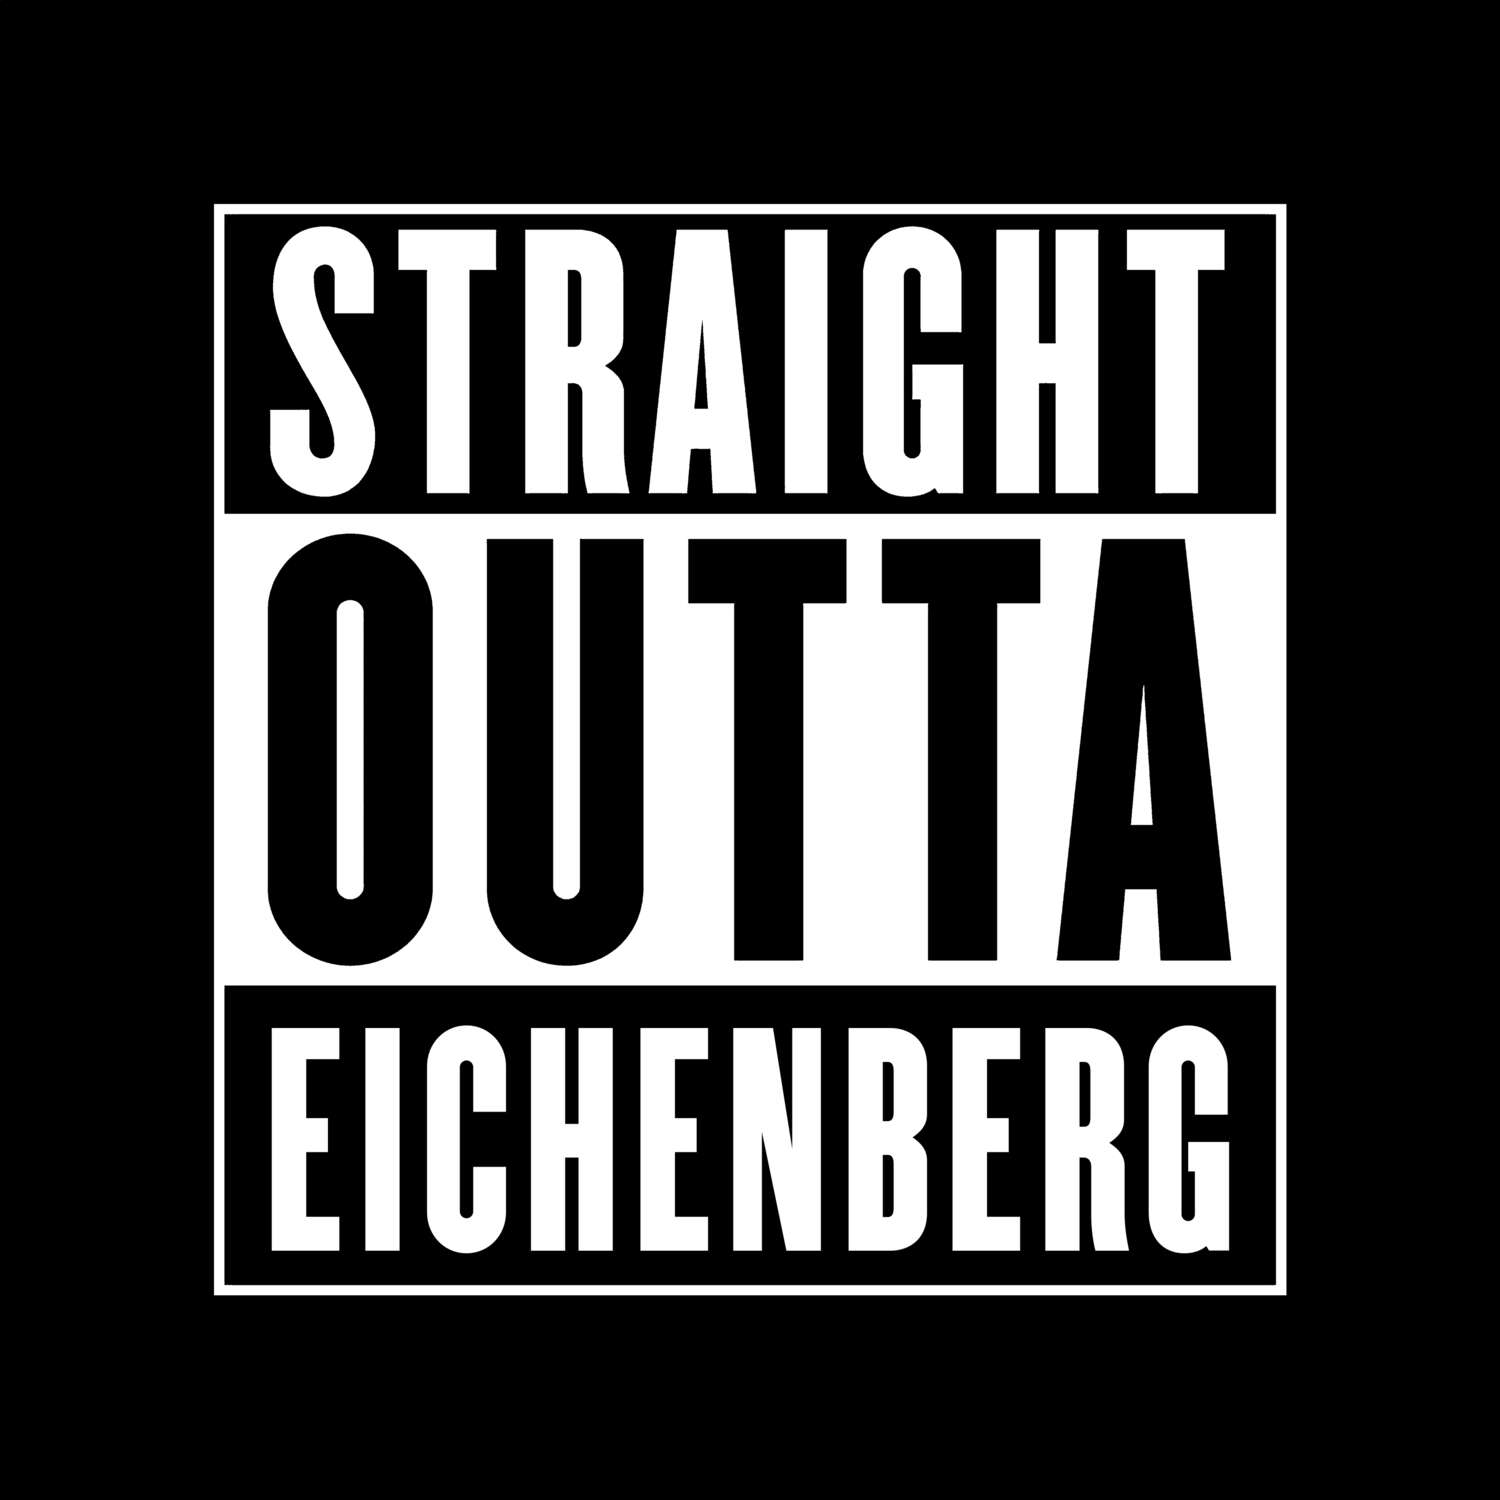 Eichenberg T-Shirt »Straight Outta«